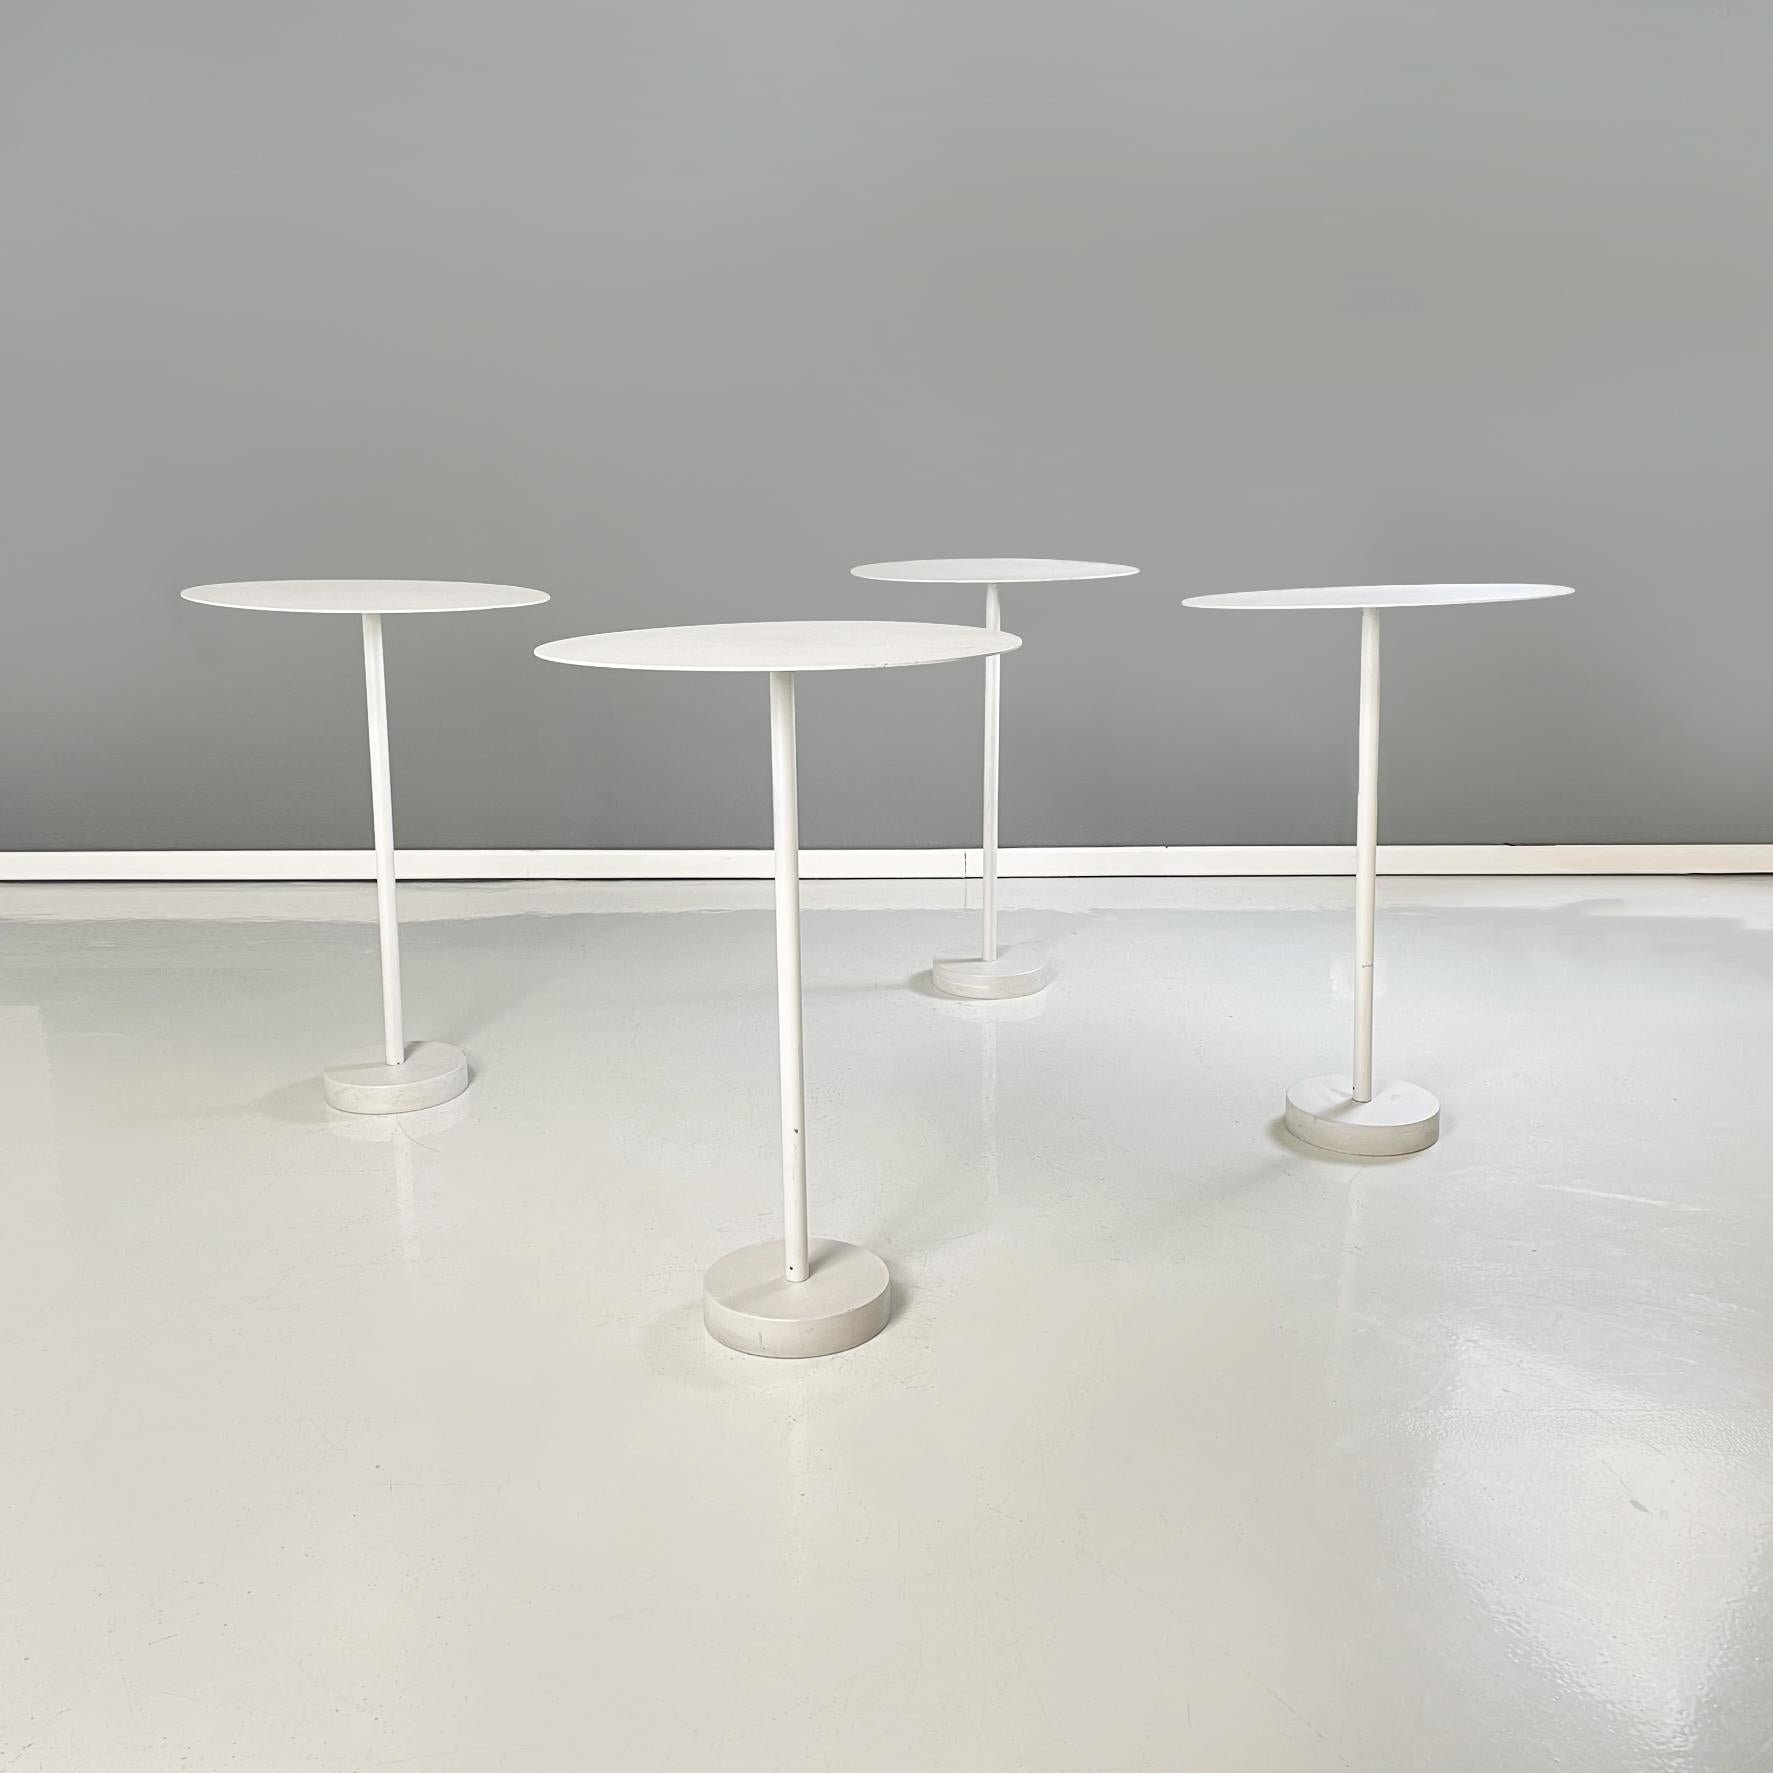 Modern Italian modern Bincan Tables by Naoto Fukasawa for Danese Milano, 2000s For Sale